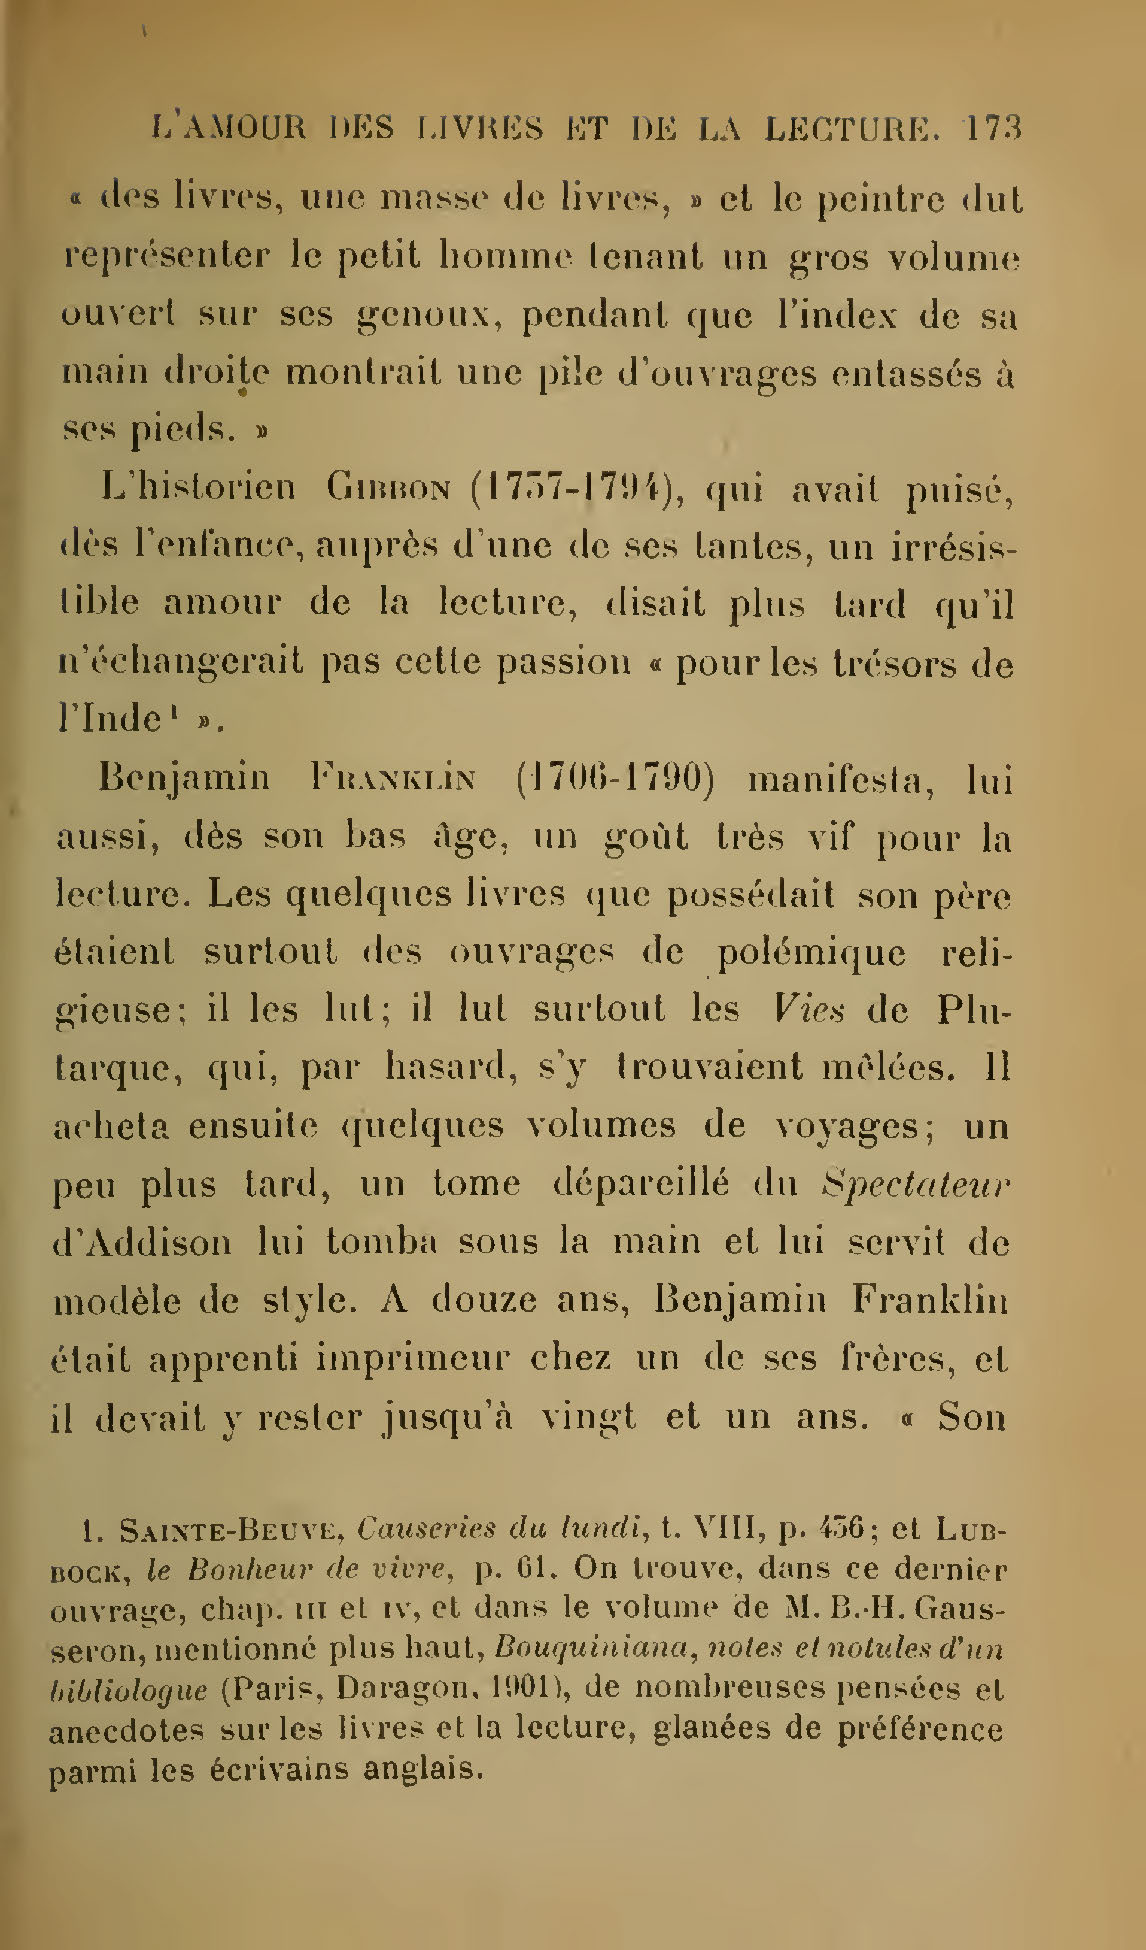 Albert Cim, Le Livre, t. I, p. 173.